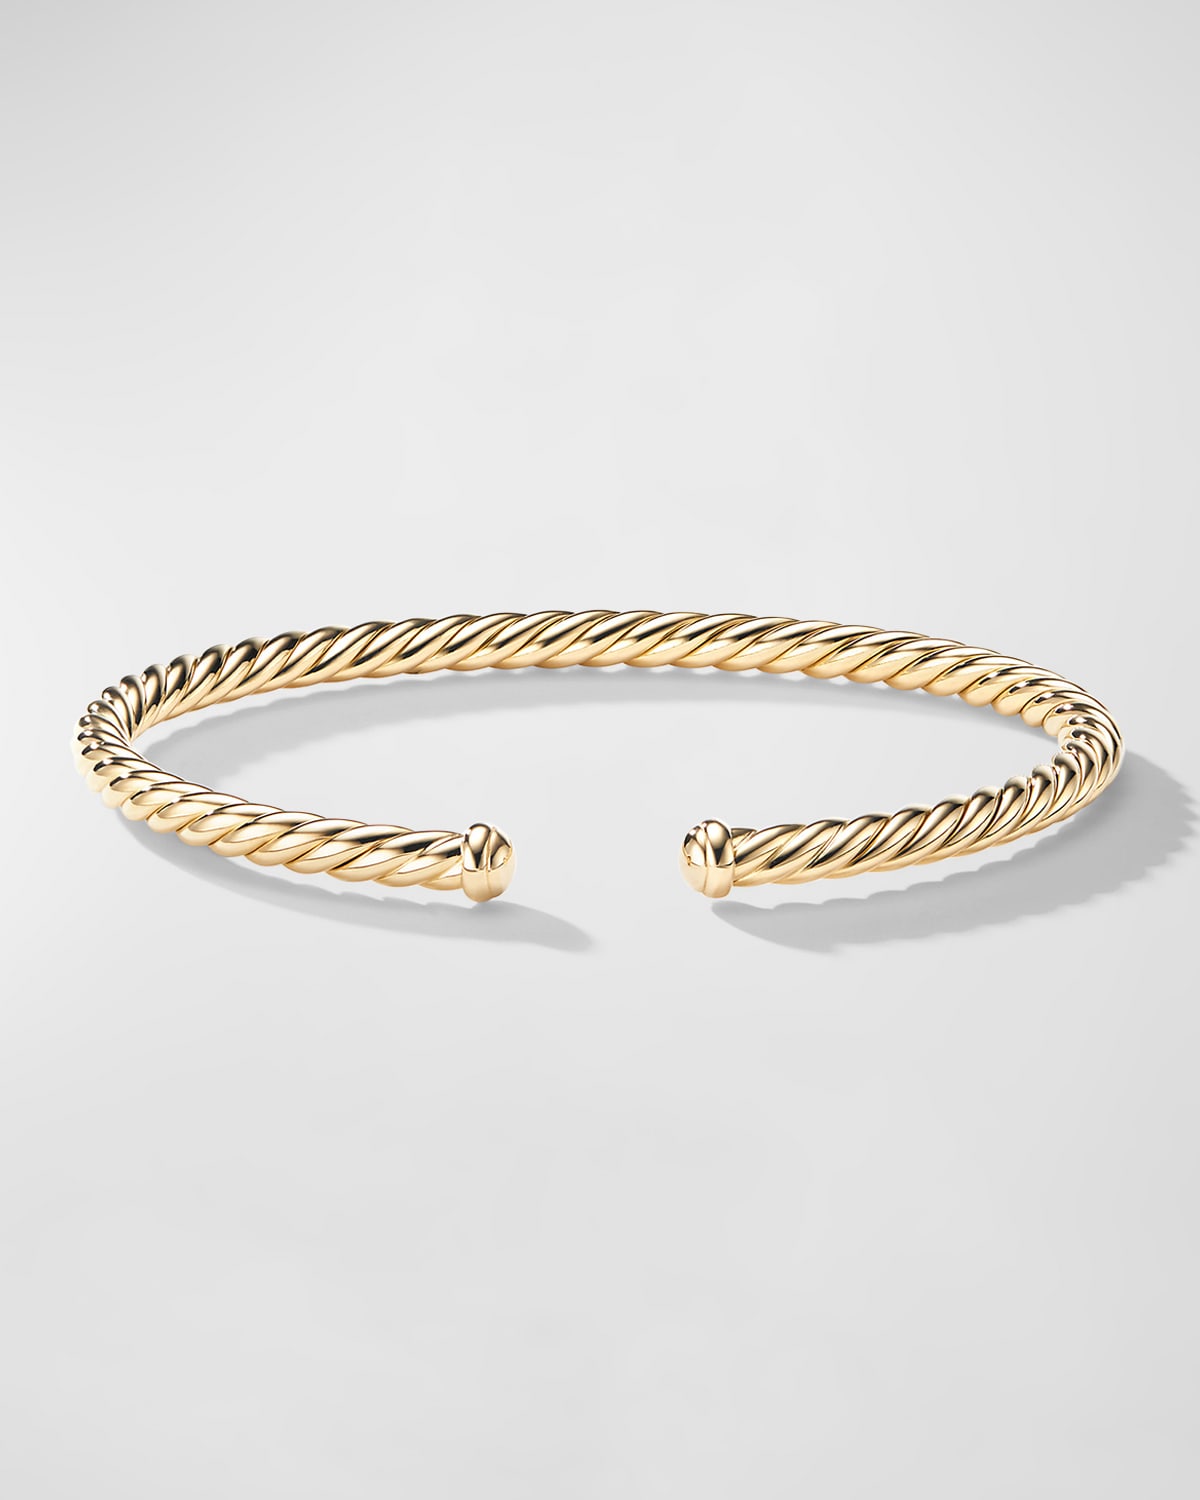 4mm Cablespira Bracelet in Gold, Size L